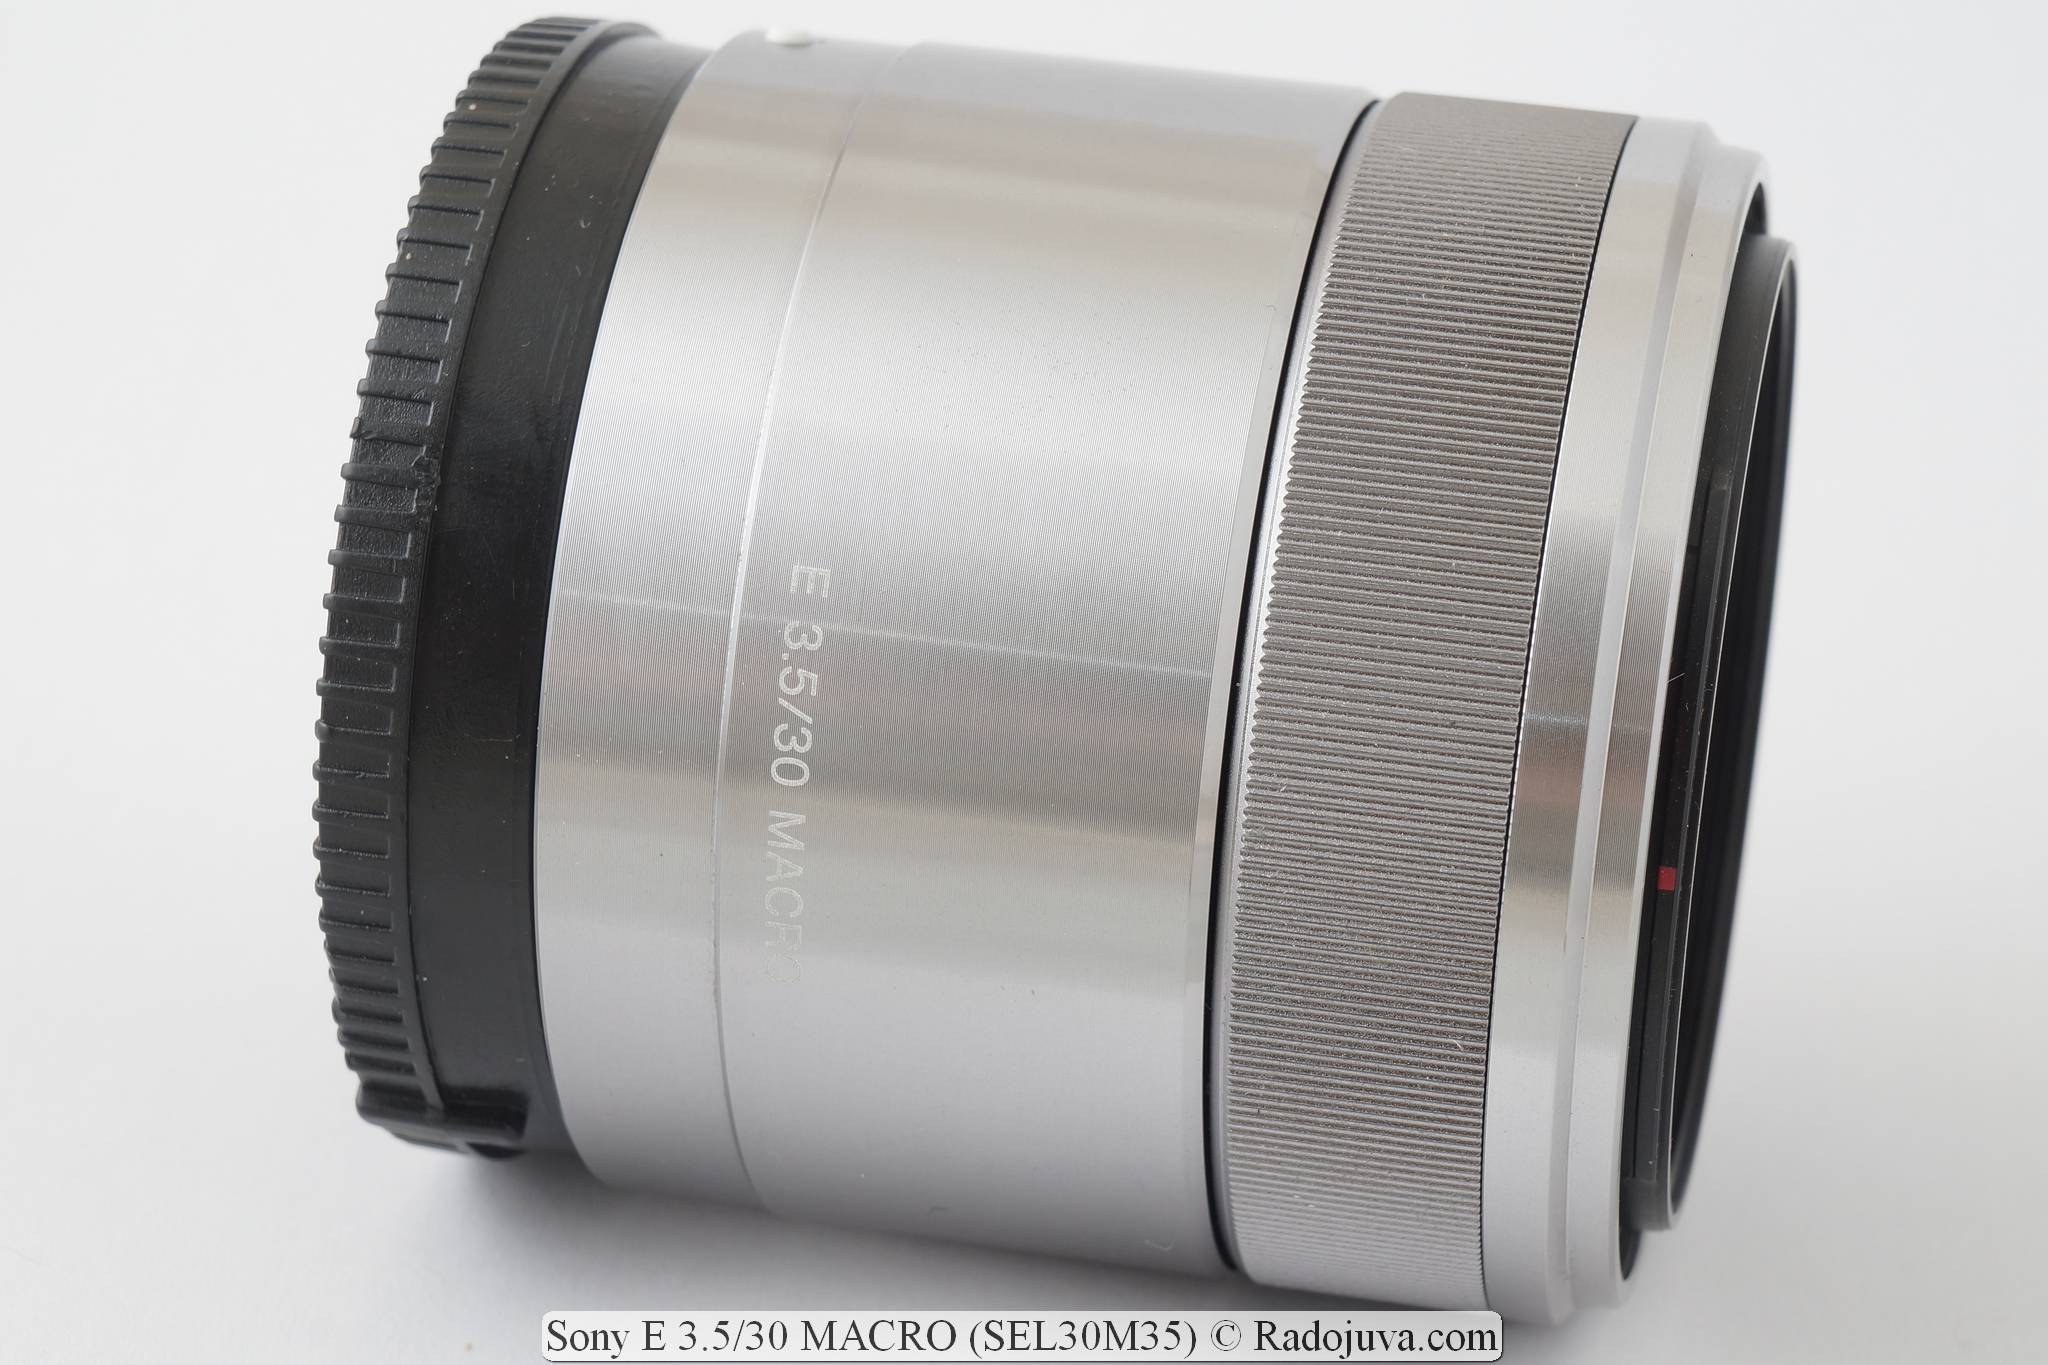 Sony E 3.5 / 30 MACRO review - macro lens for Sony E APS-C | Happy